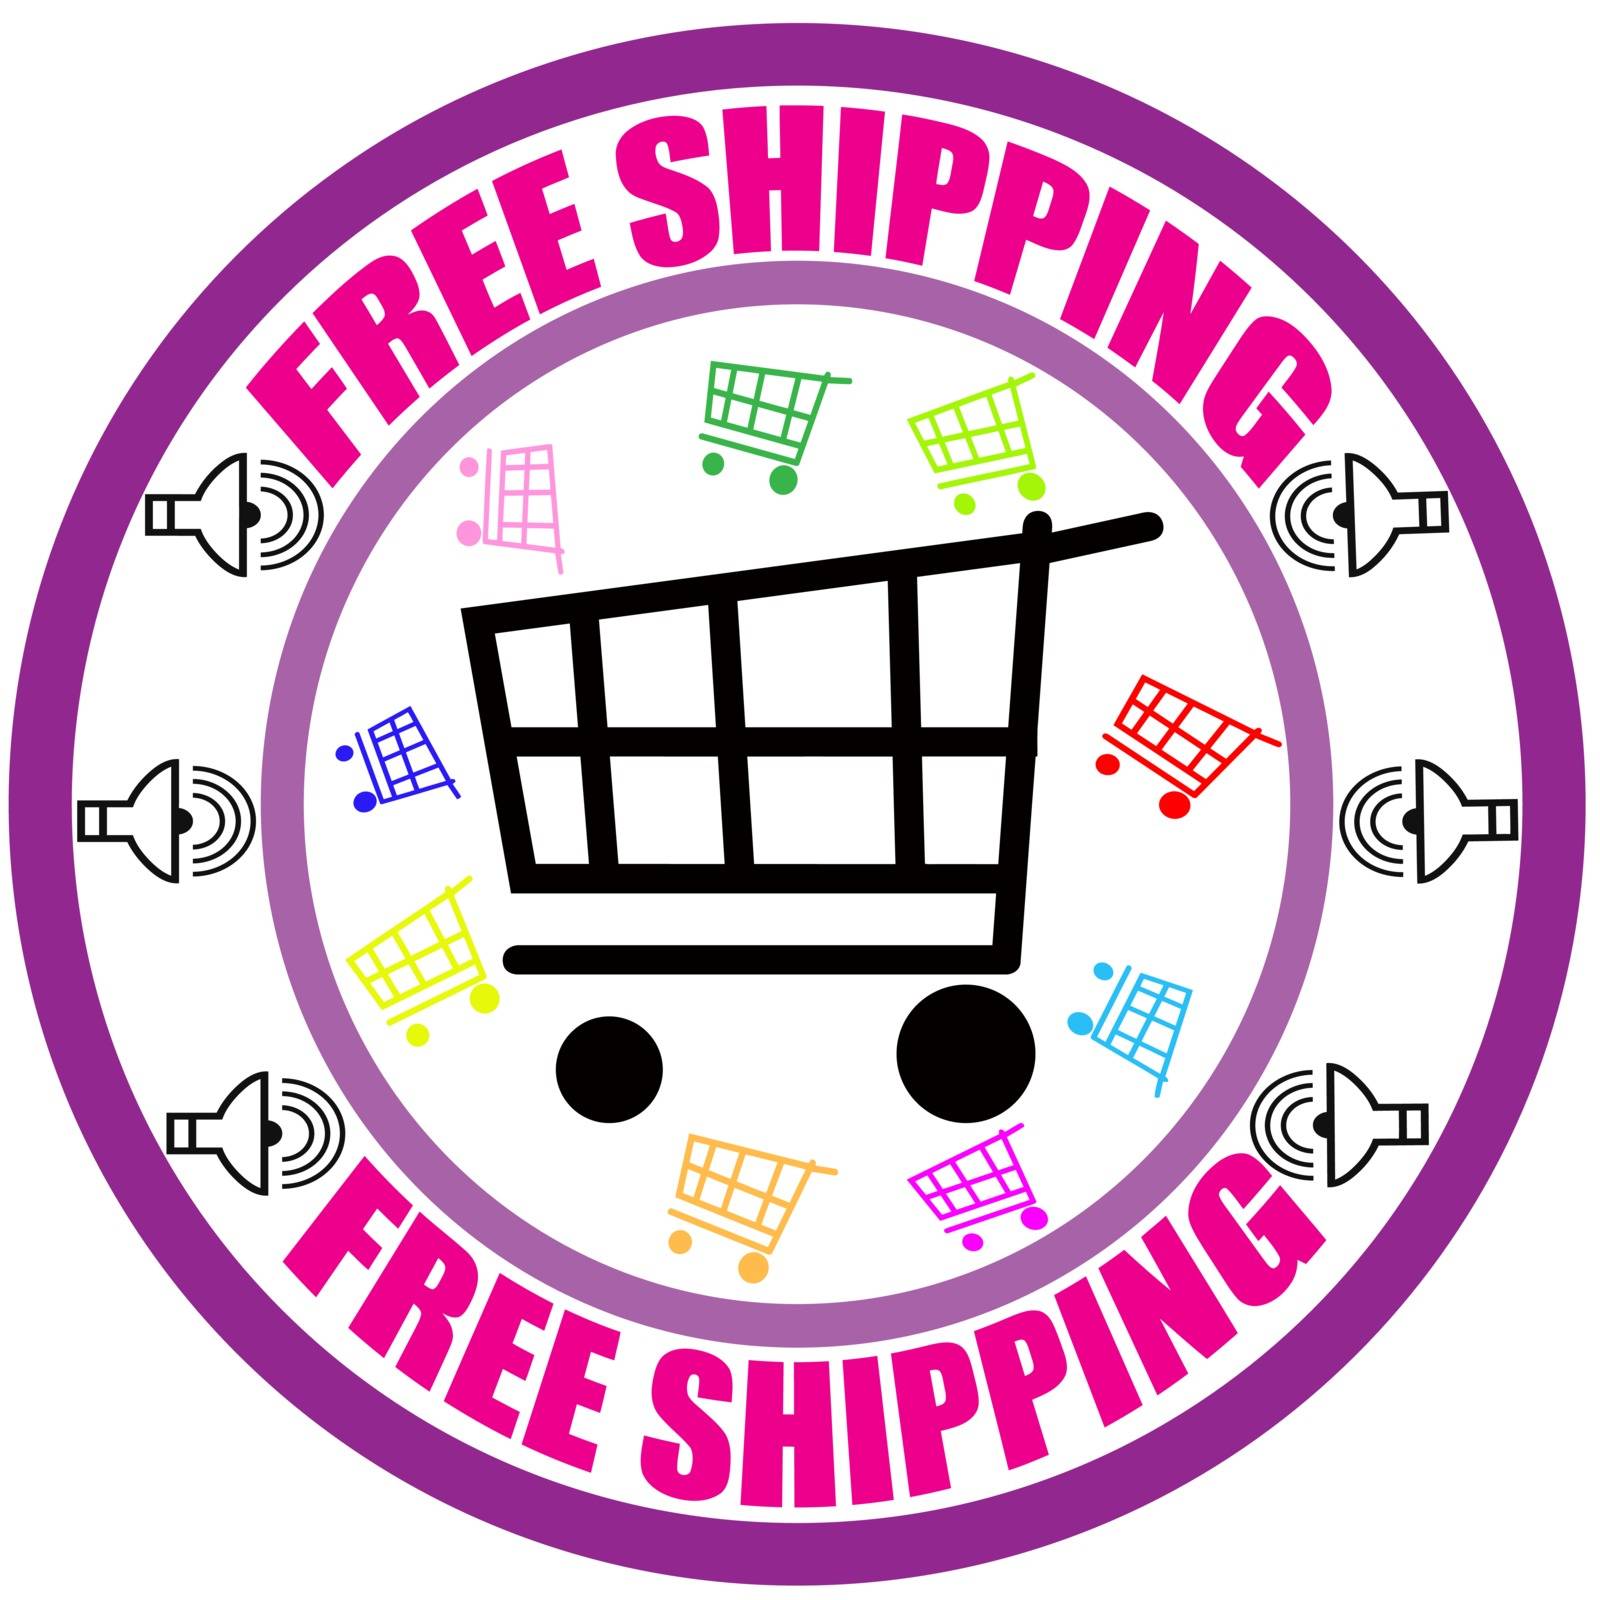 Free shipping by carmenbobo